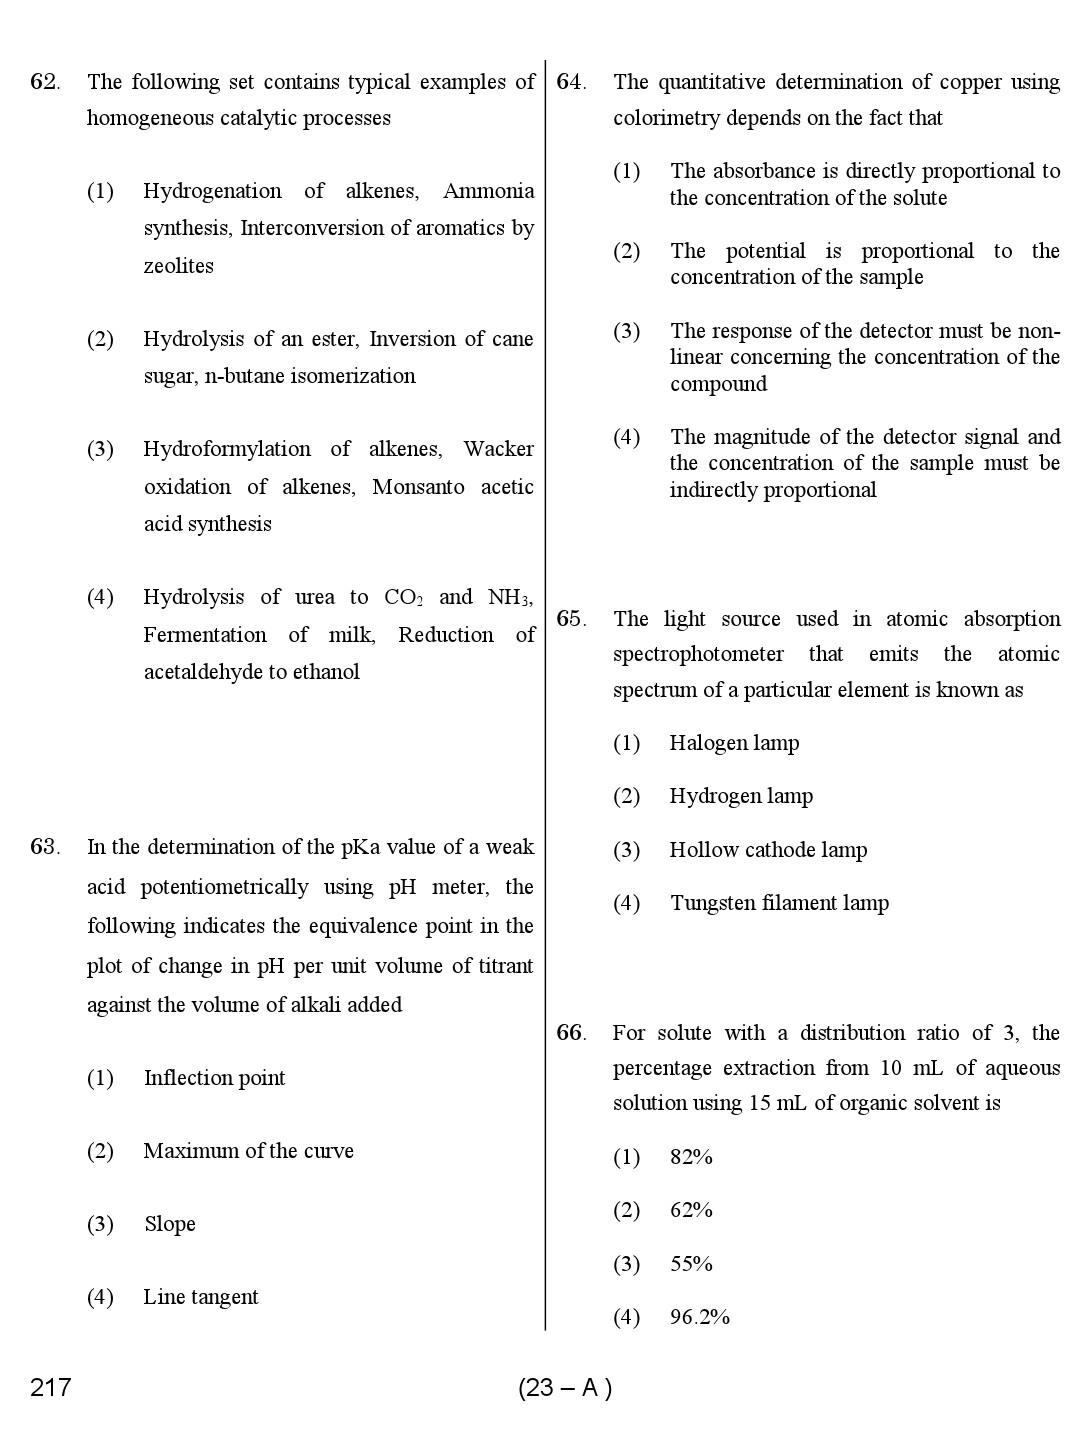 Karnataka PSC Chemist Exam Sample Question Paper 23